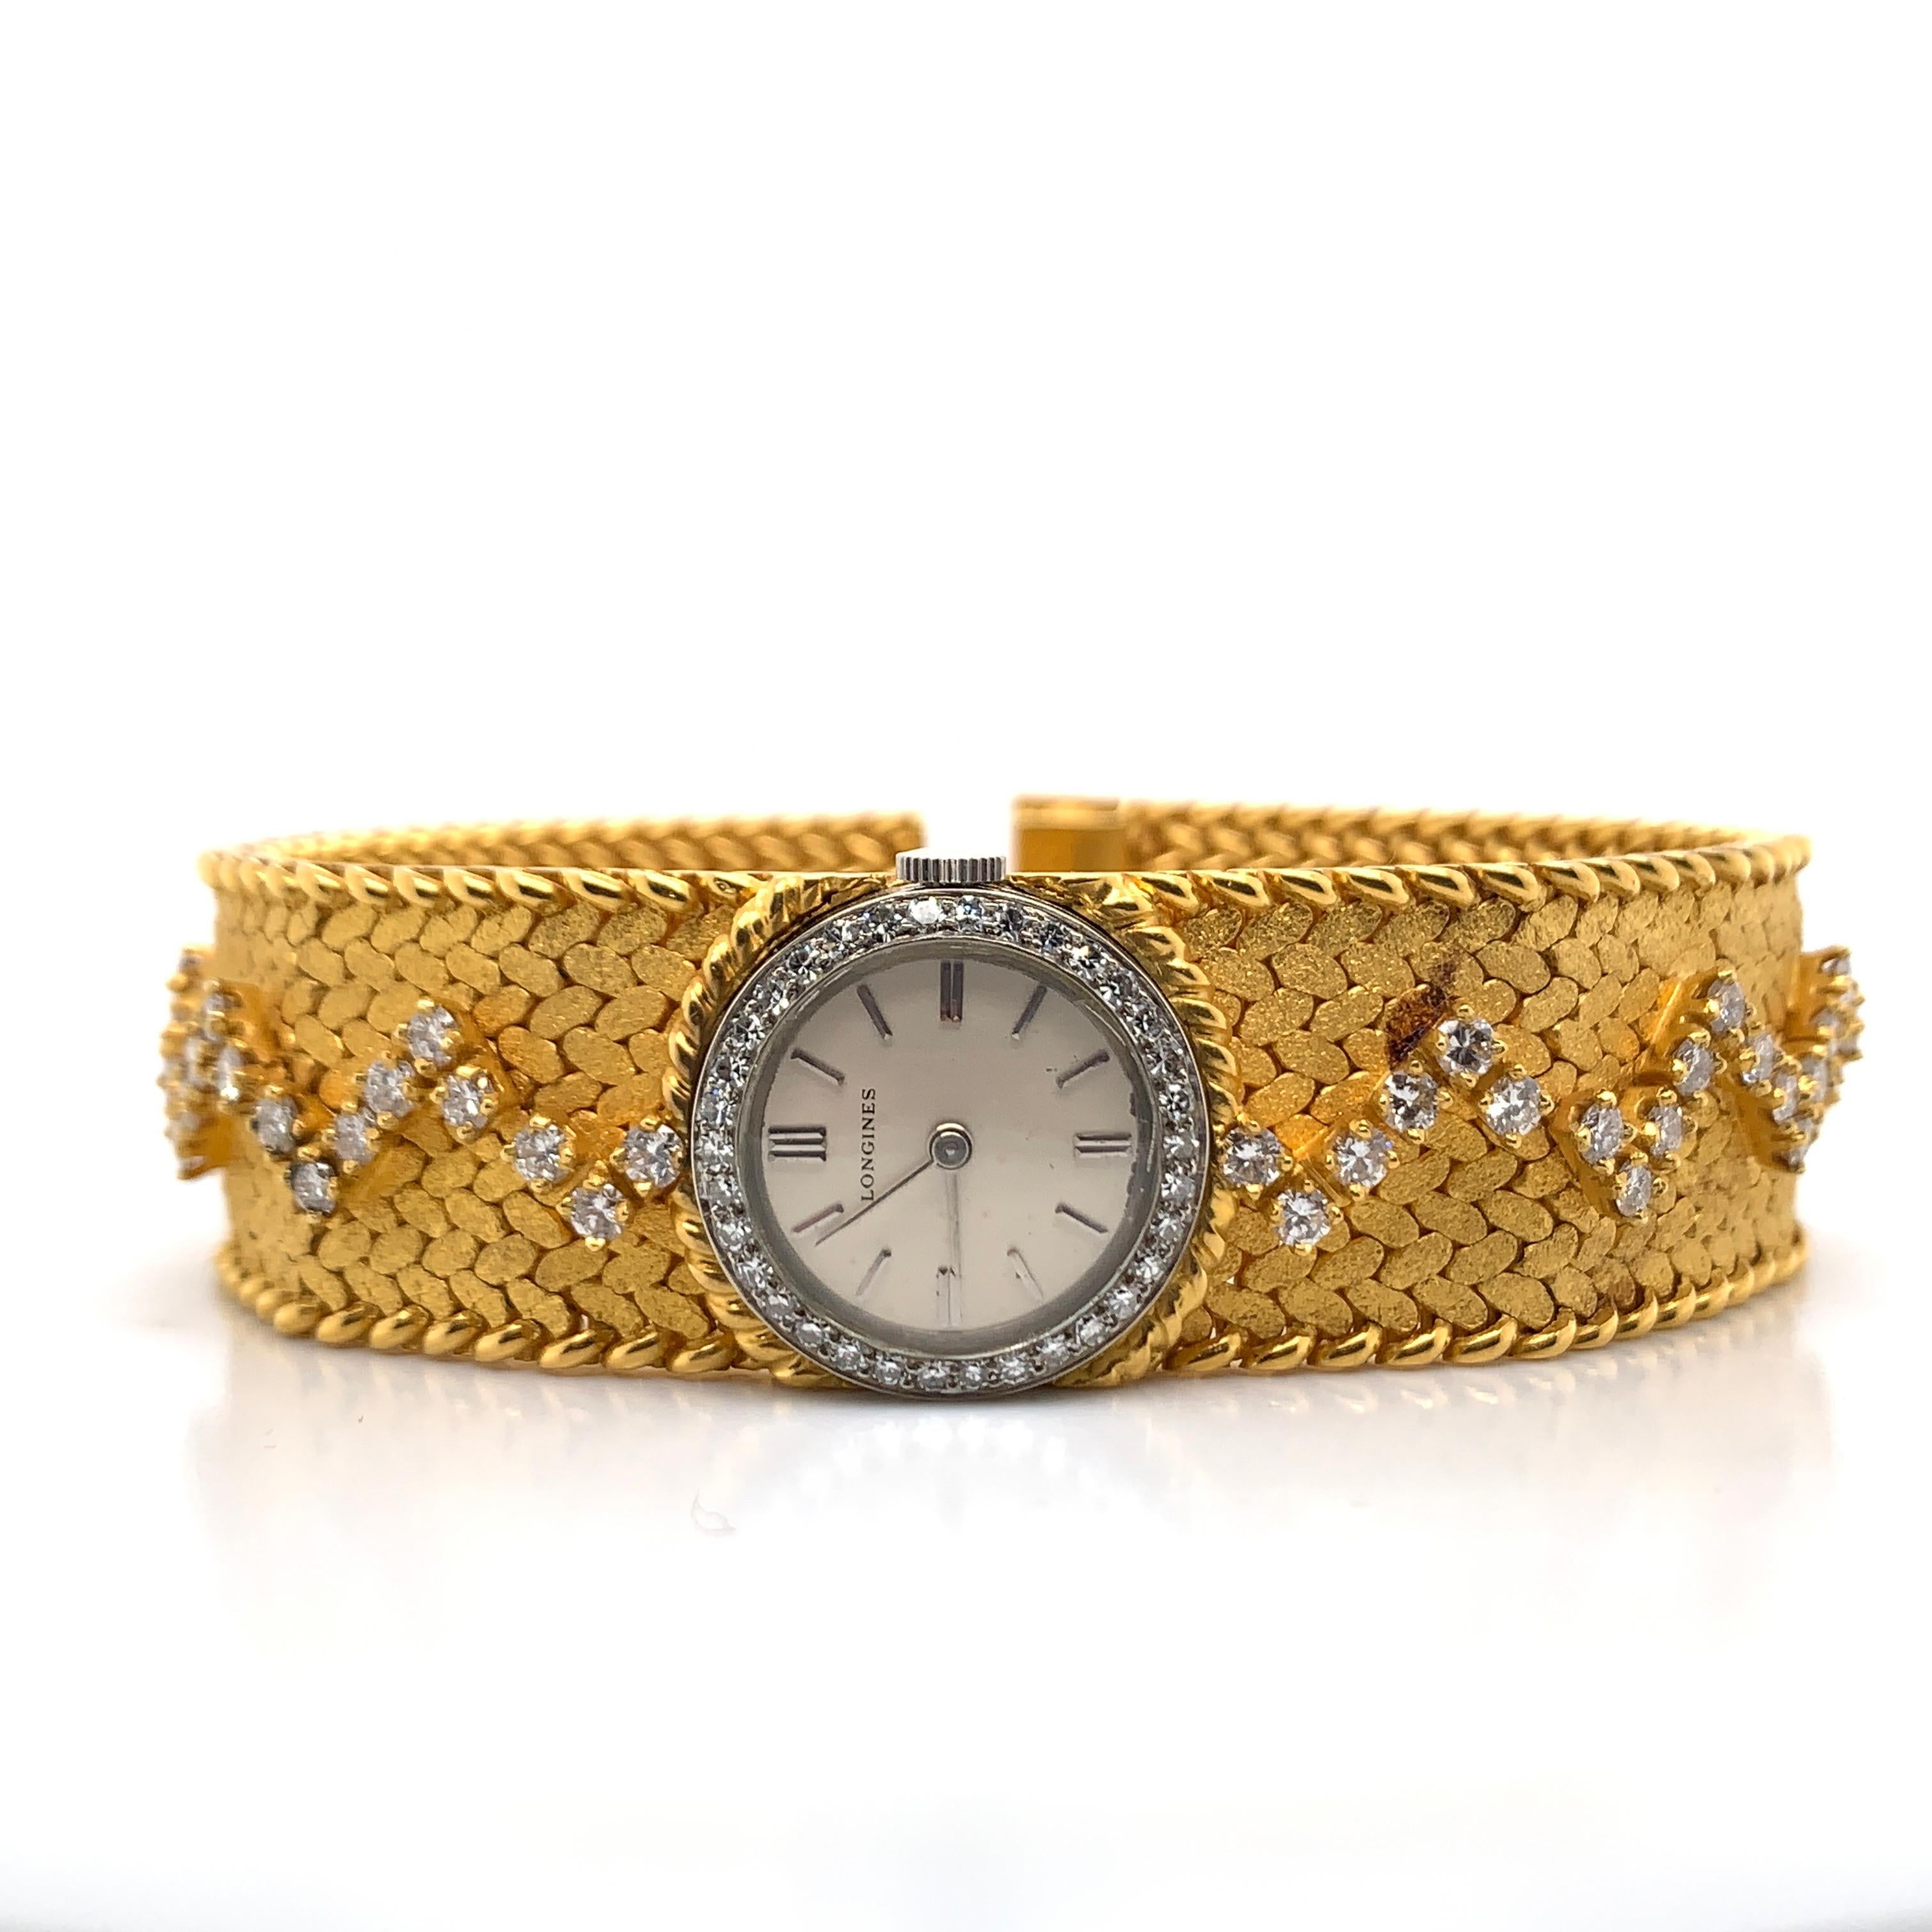 Women's or Men's Cartier, Two-Color Gold and Diamond Bracelet Watch, Longines